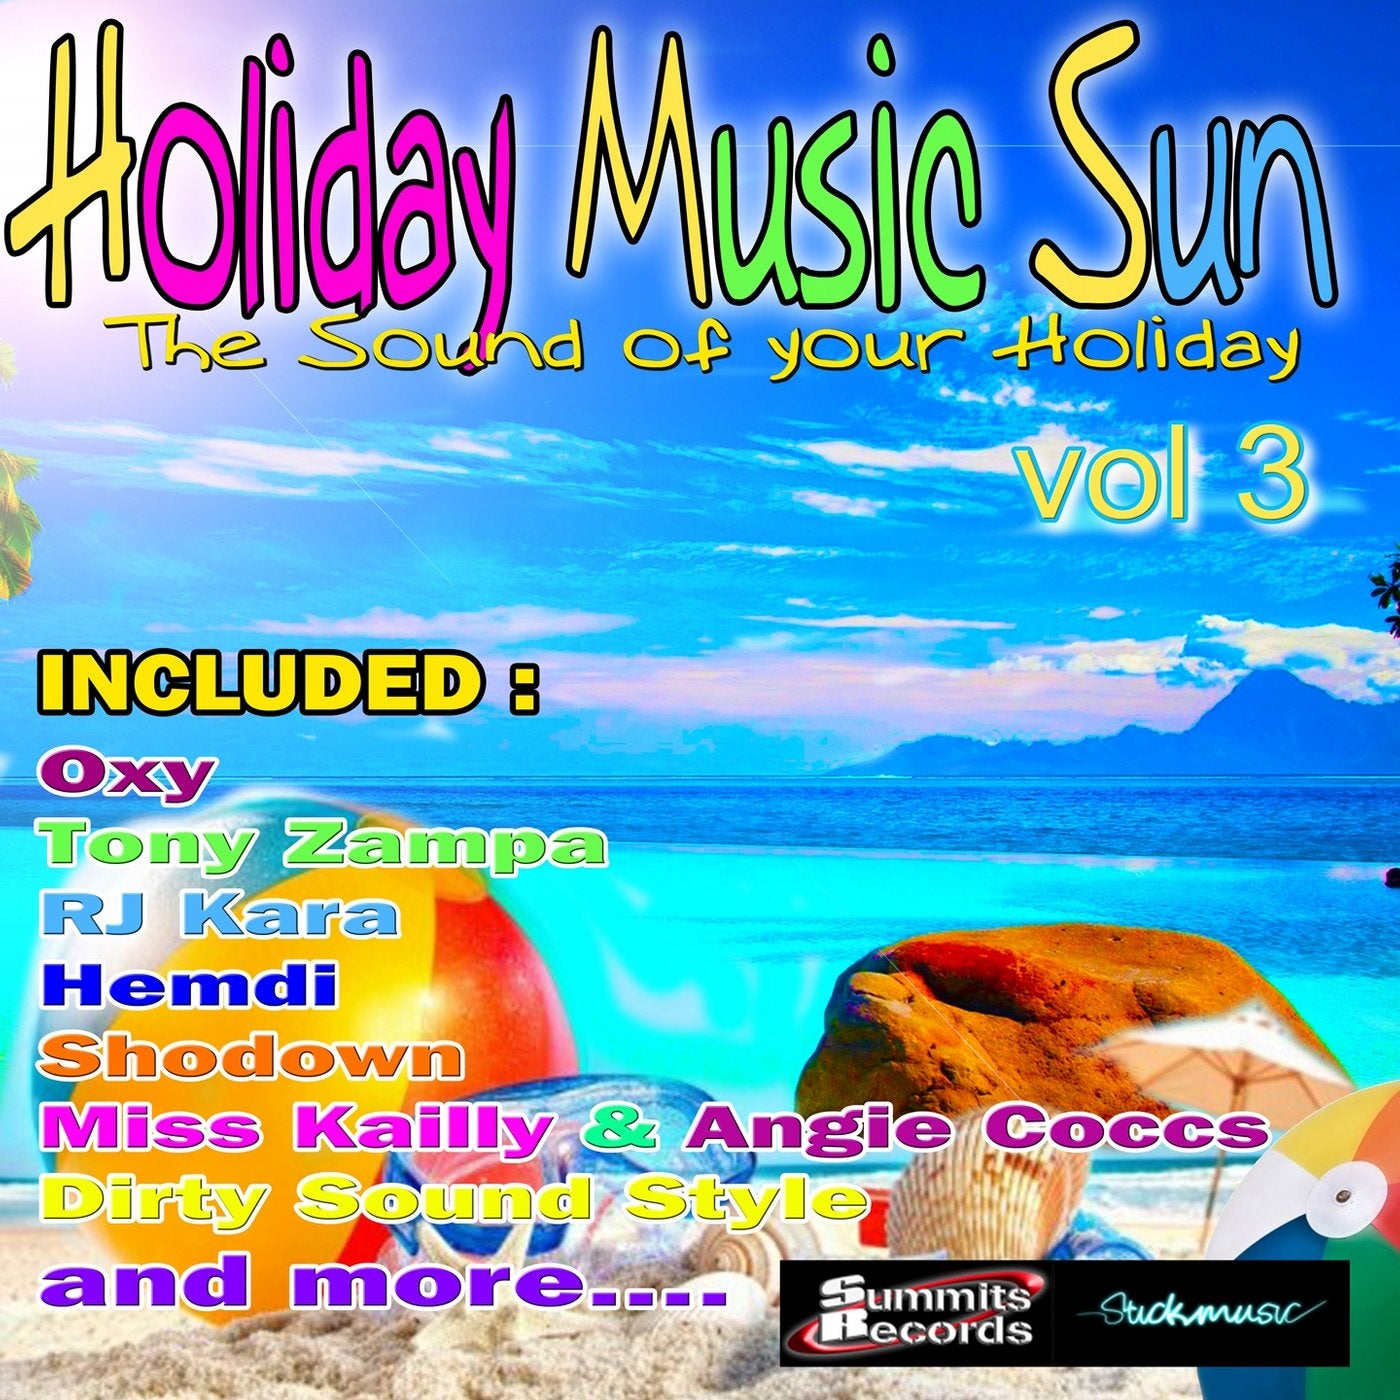 Holiday Music Sun, Vol. 3